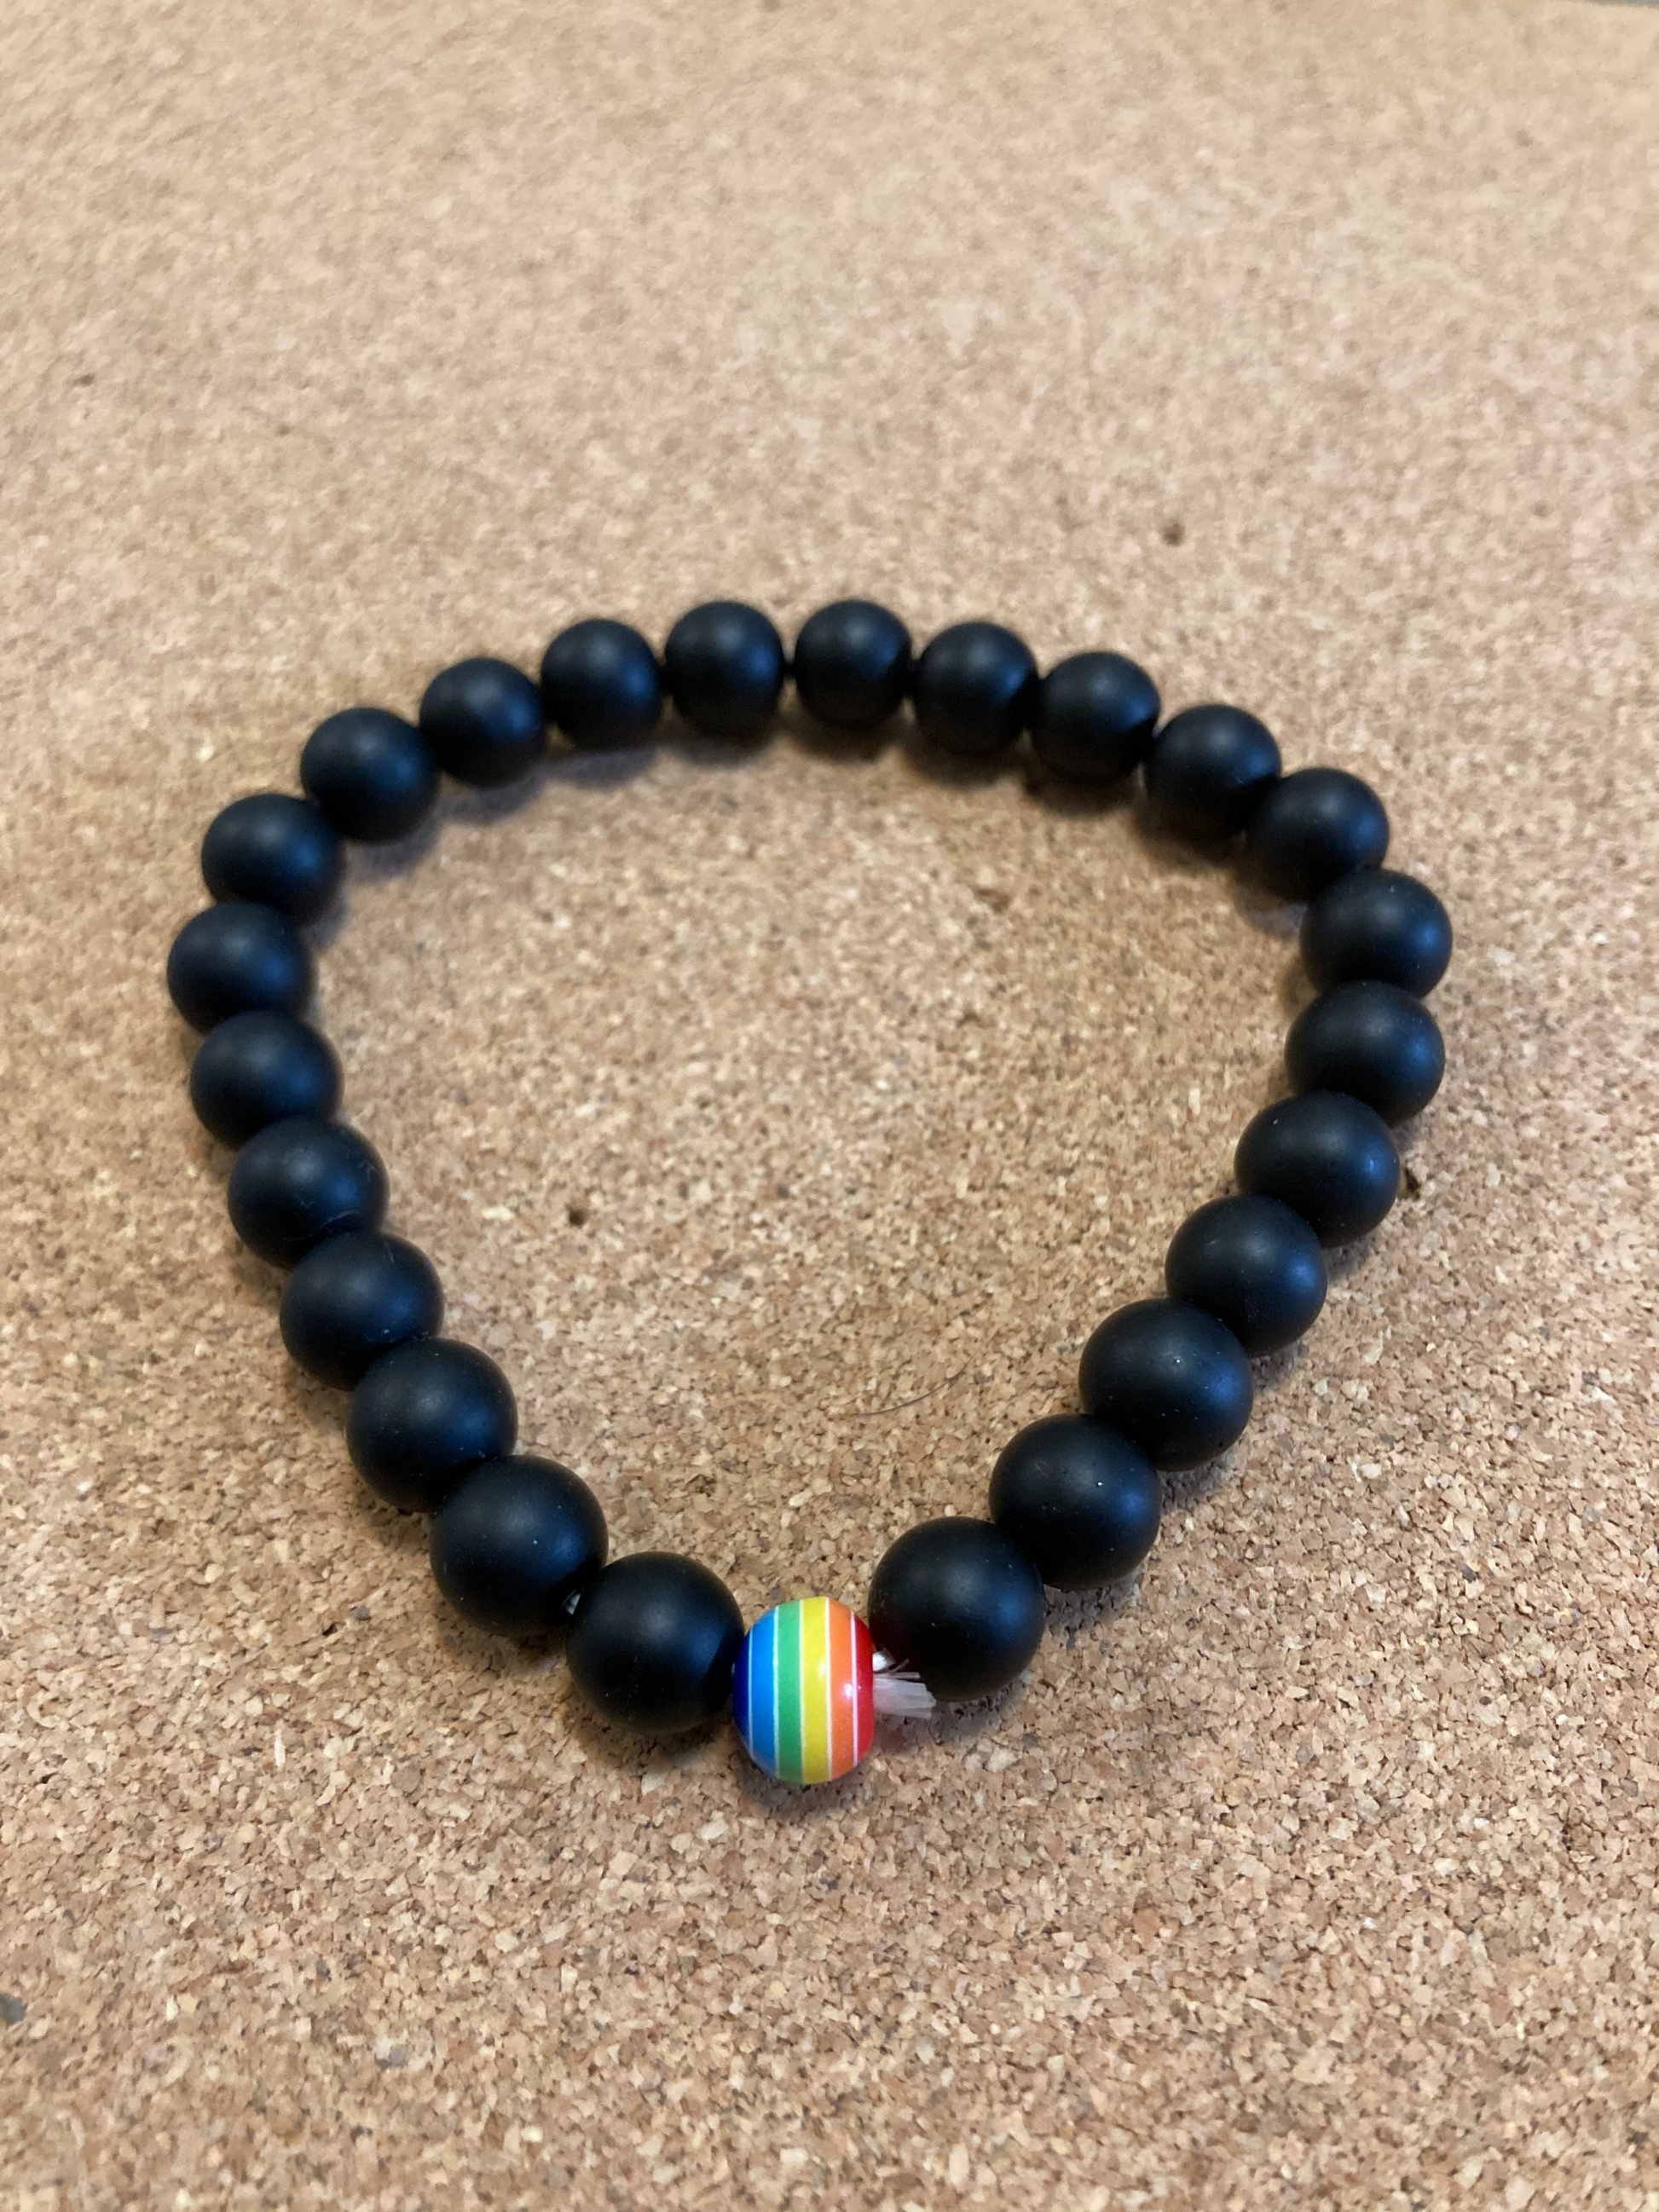 black beads with singular rainbow bead in the center. LGBTQ Pride